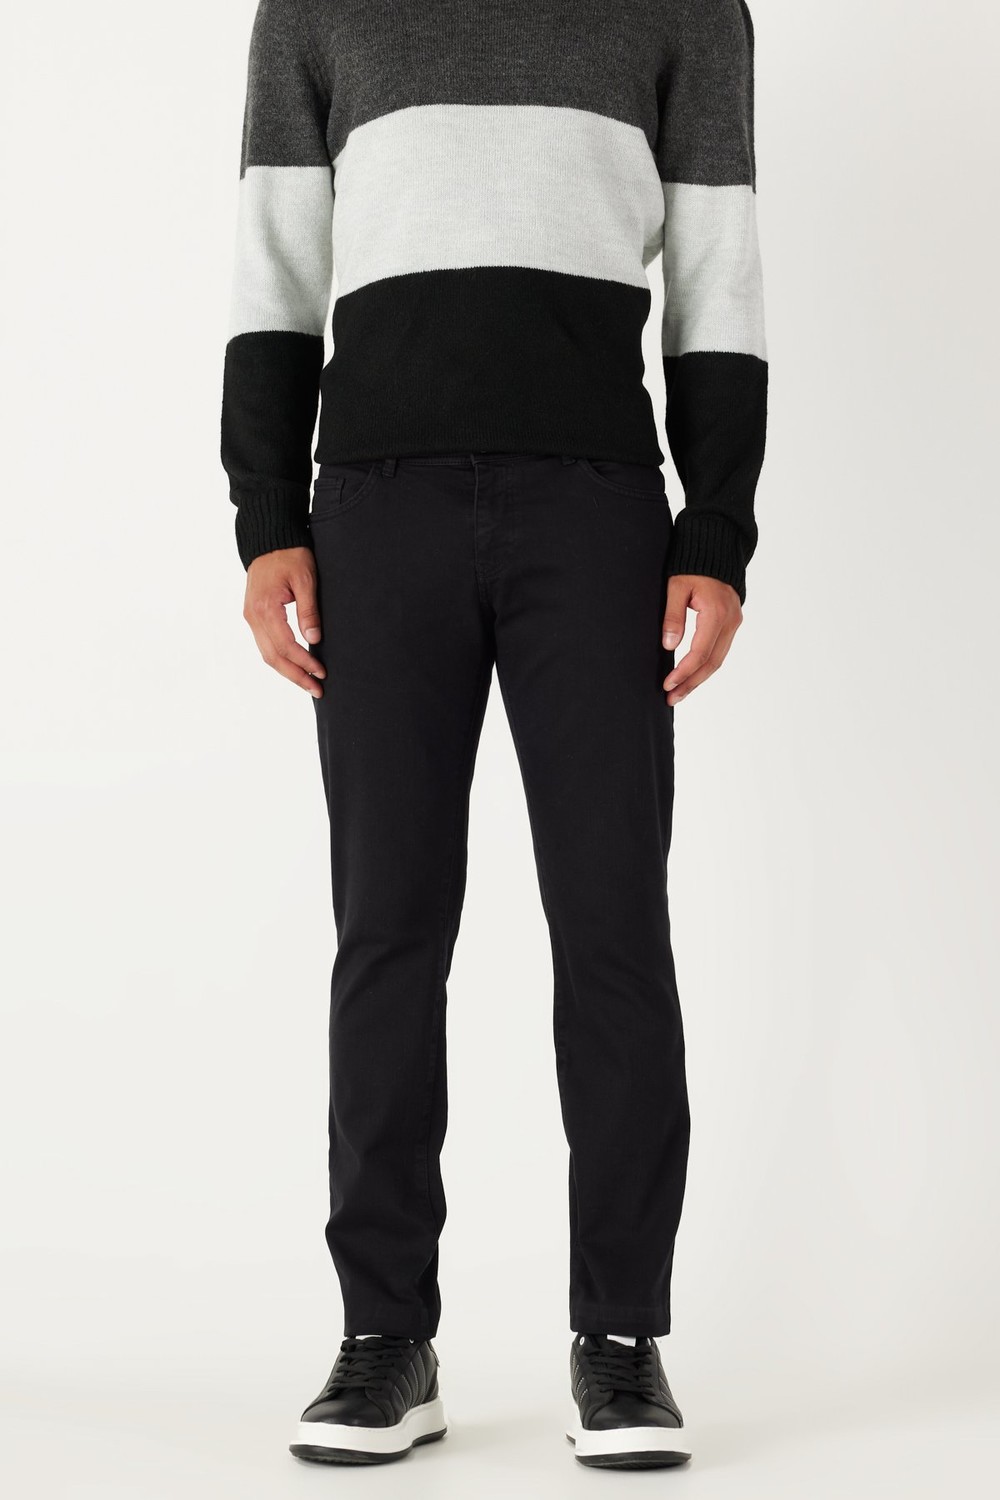 ALTINYILDIZ CLASSICS Men's Black 360-Degree Stretch Stretch in All Directions, Slim Fit Slim Fit Cotton Comfort Trousers.